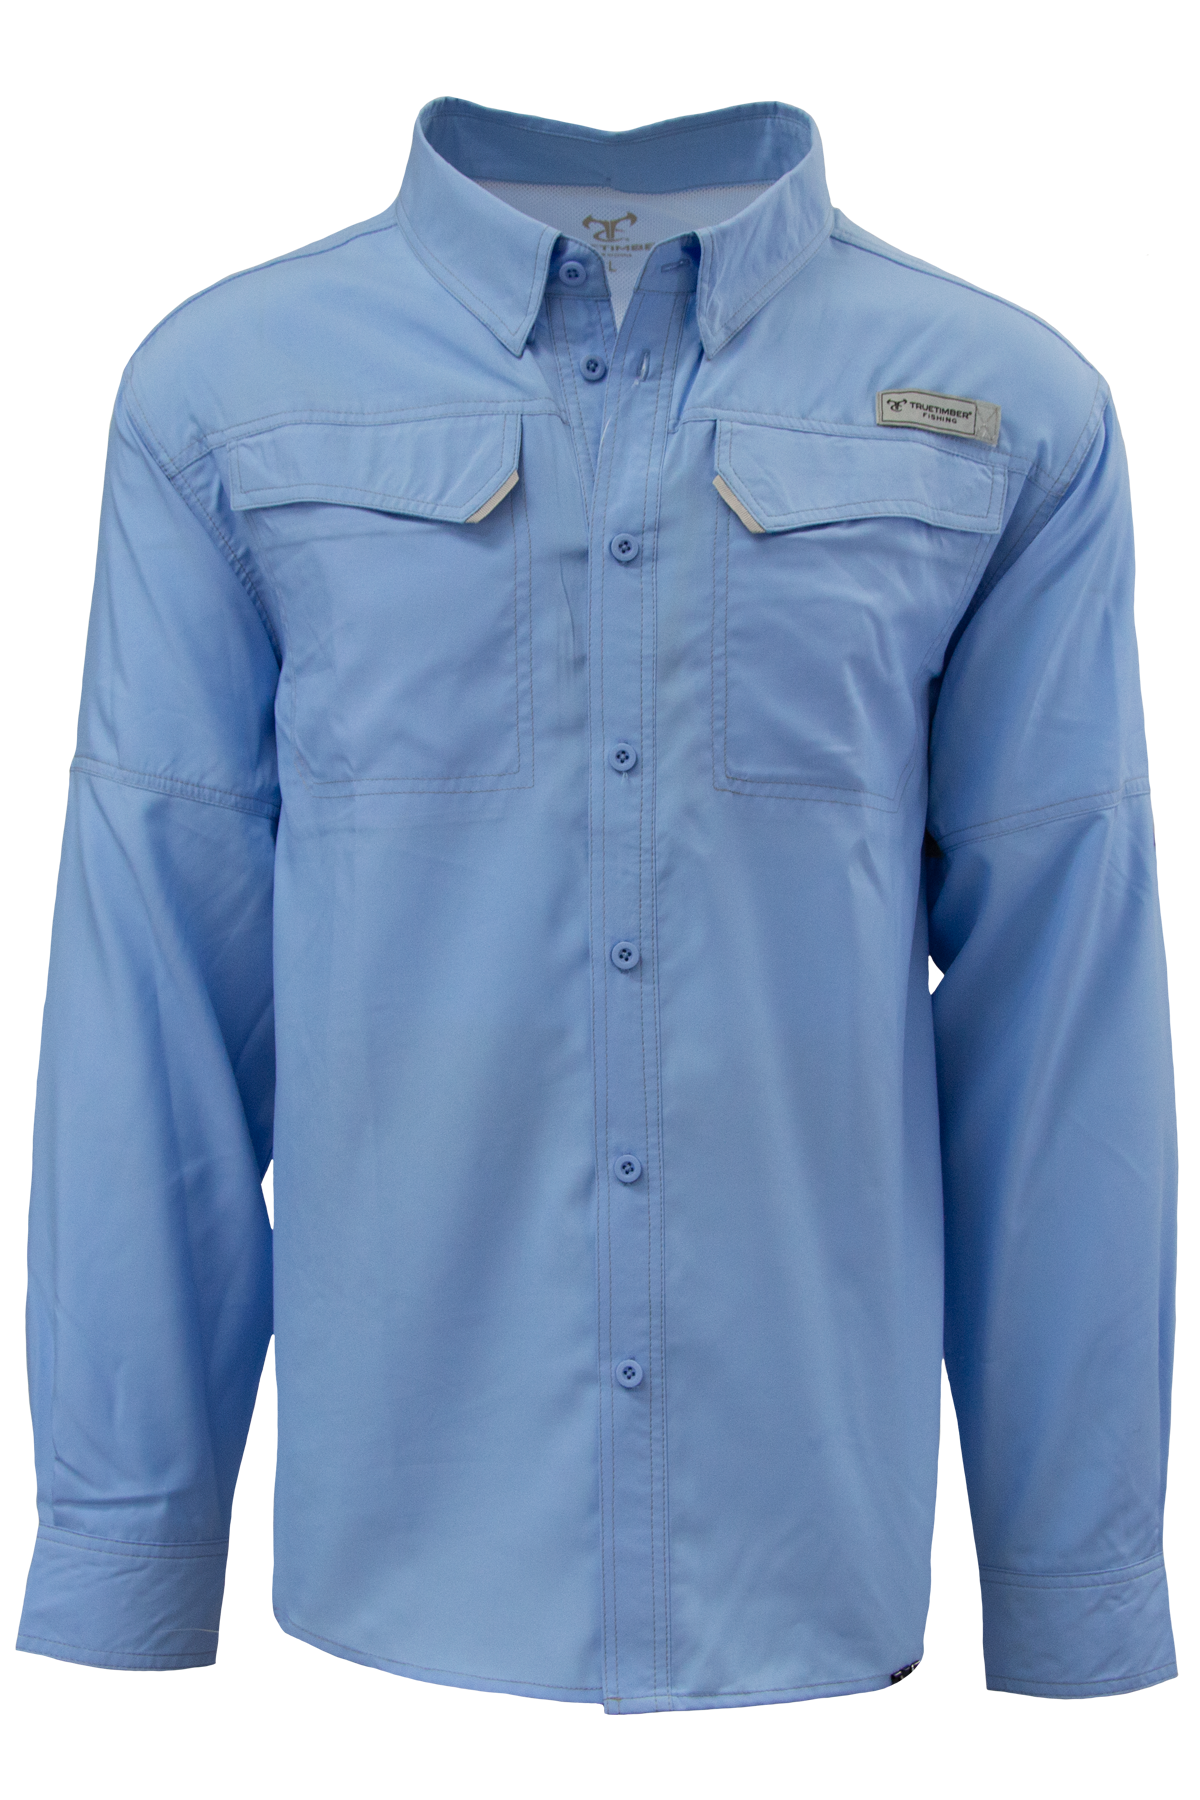 https://cs1.0ps.us/original/opplanet-truetimber-bakstaye-long-sleeve-shirt-mens-placid-blue-drizzle-medium-0798-placid-blue-drizzle-m-main